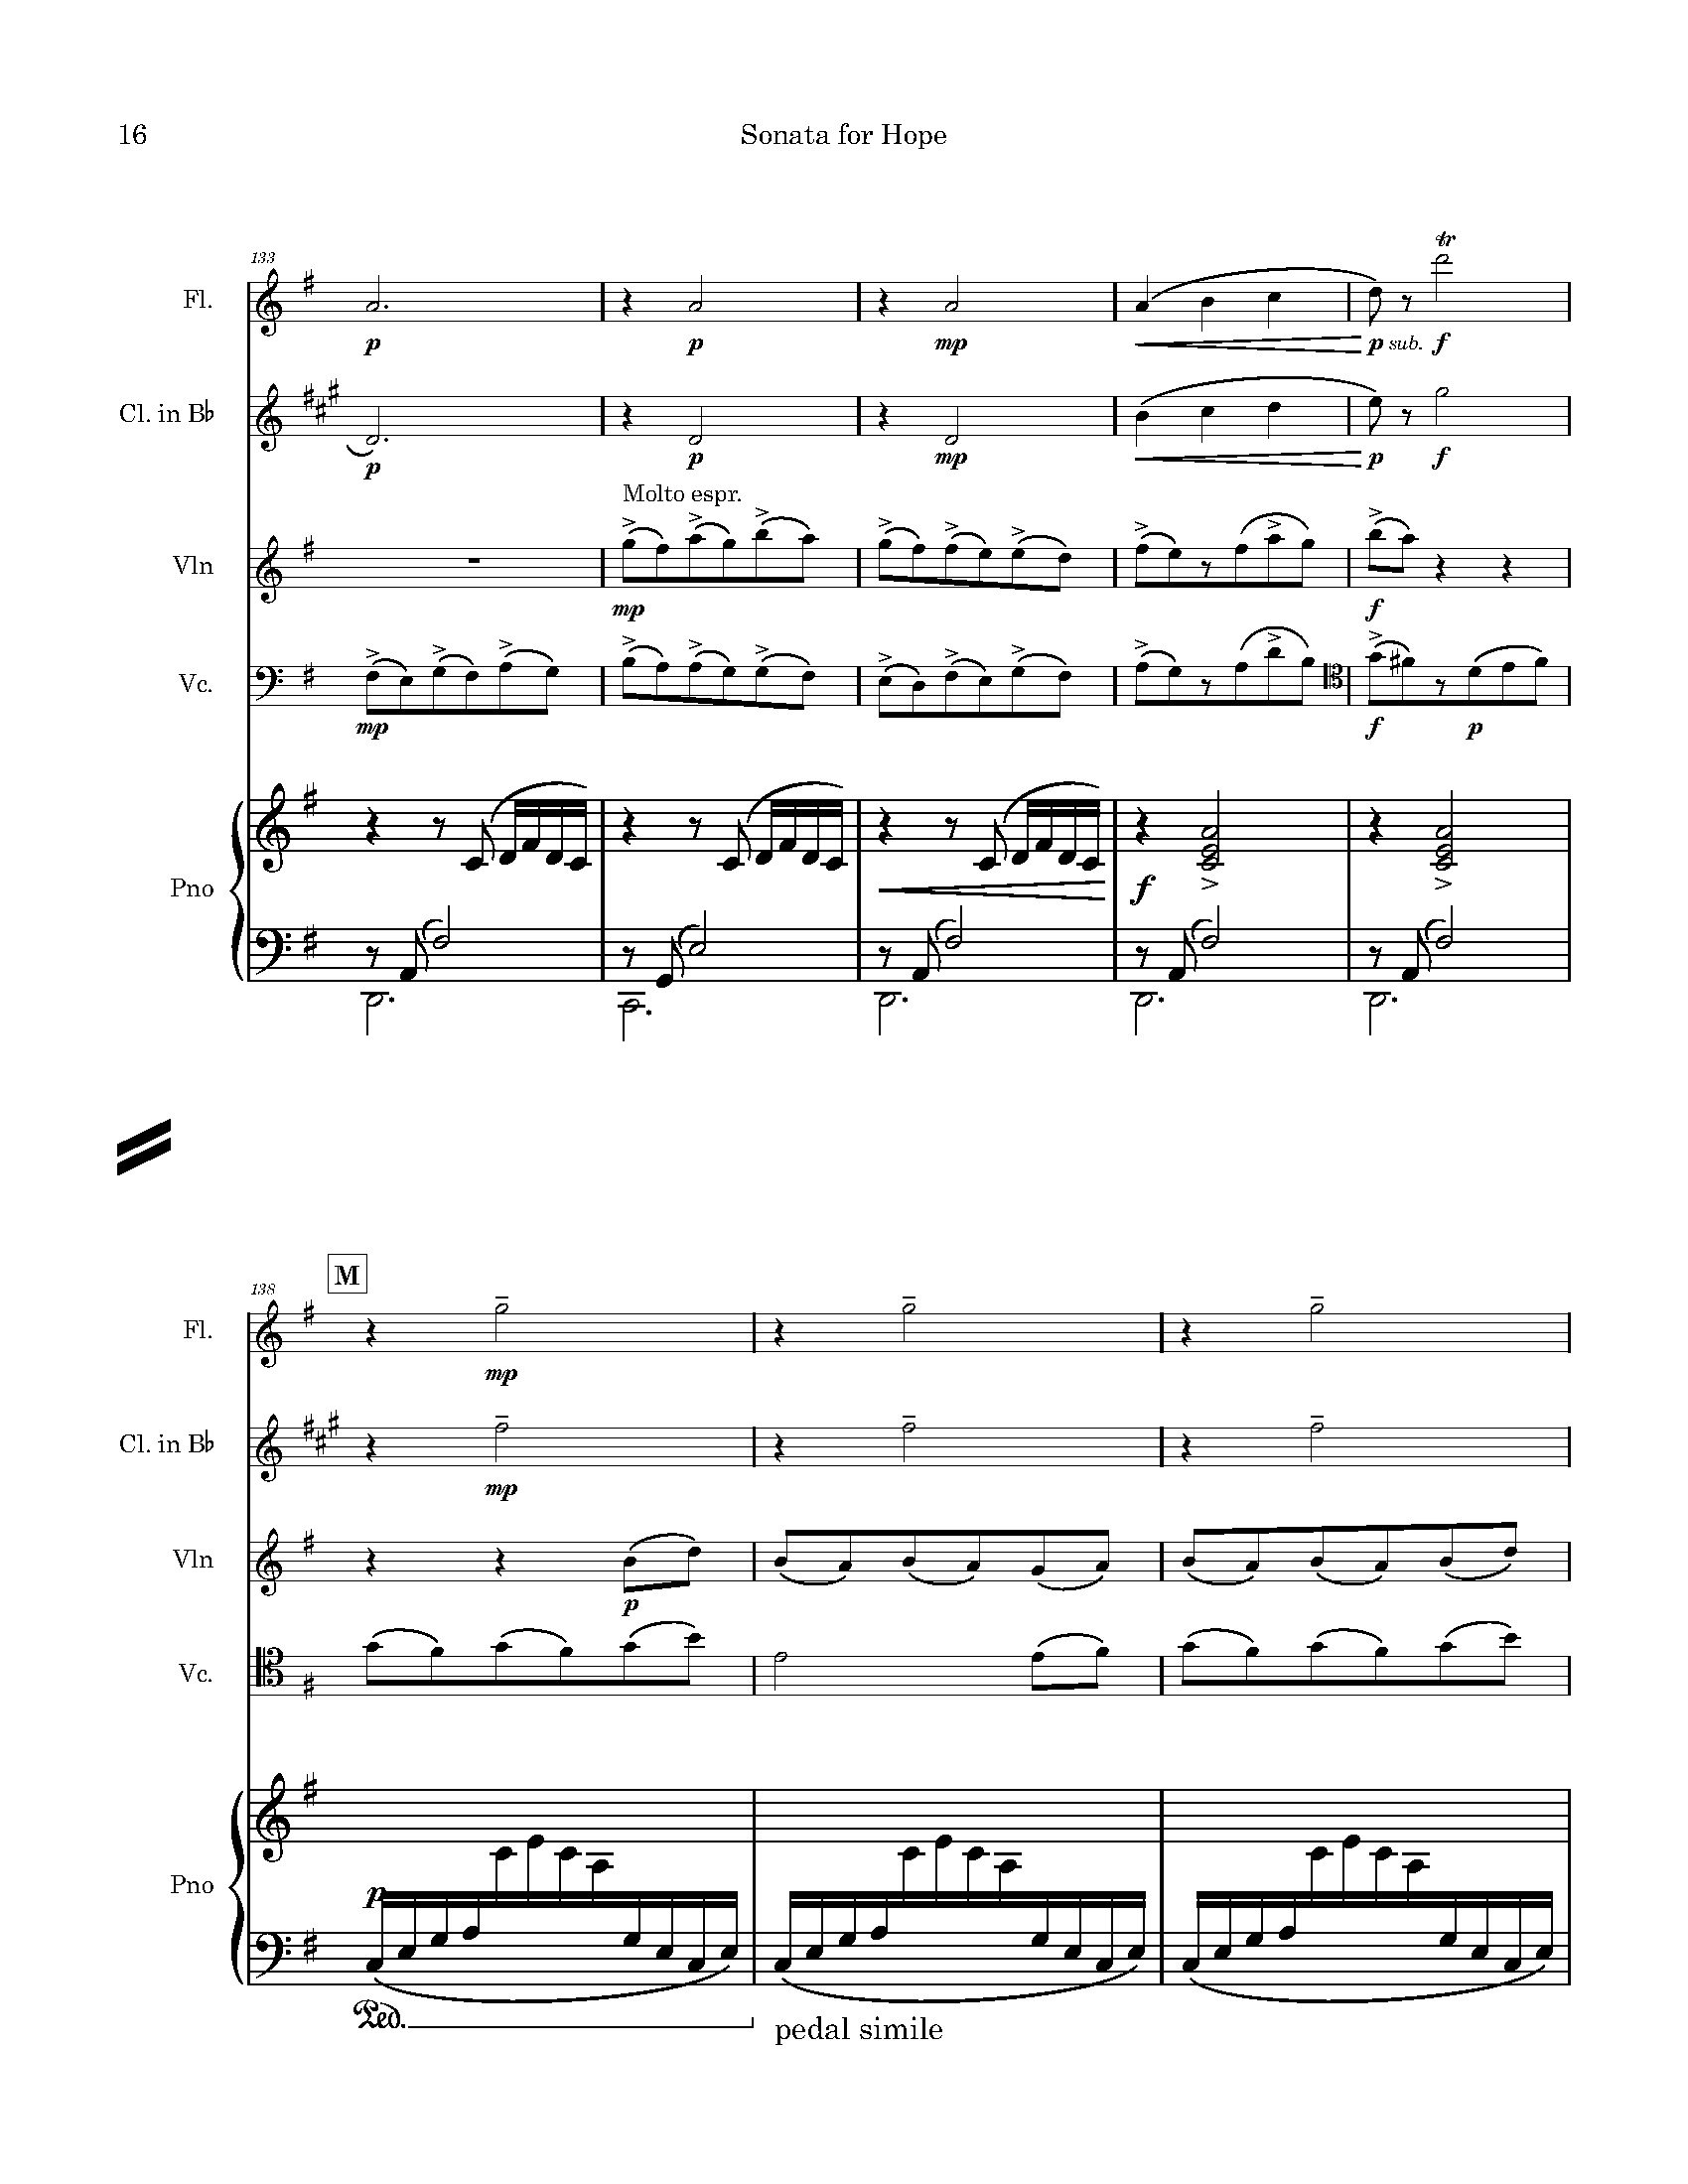 Sonata for Hope - Piano Score_Page_16.jpg